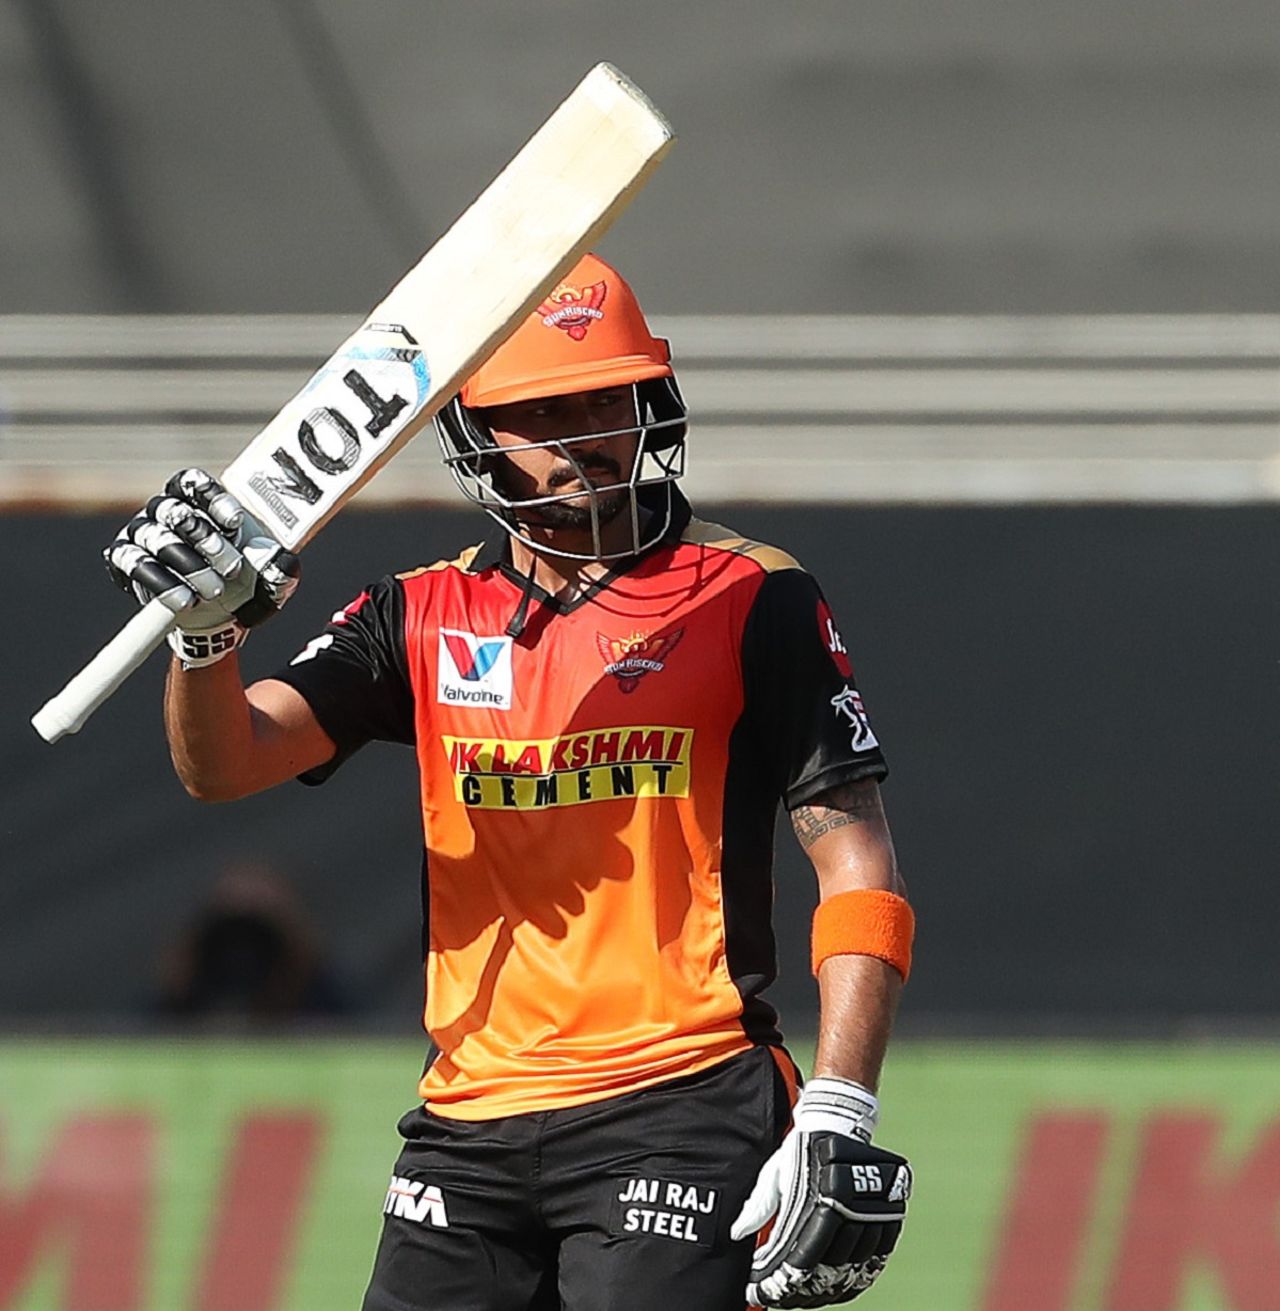 Manish Pandey scored his second half-century of the season, Sunrisers Hyderabad vs Rajasthan Royals, IPL 2020, Dubai, October 11, 2020